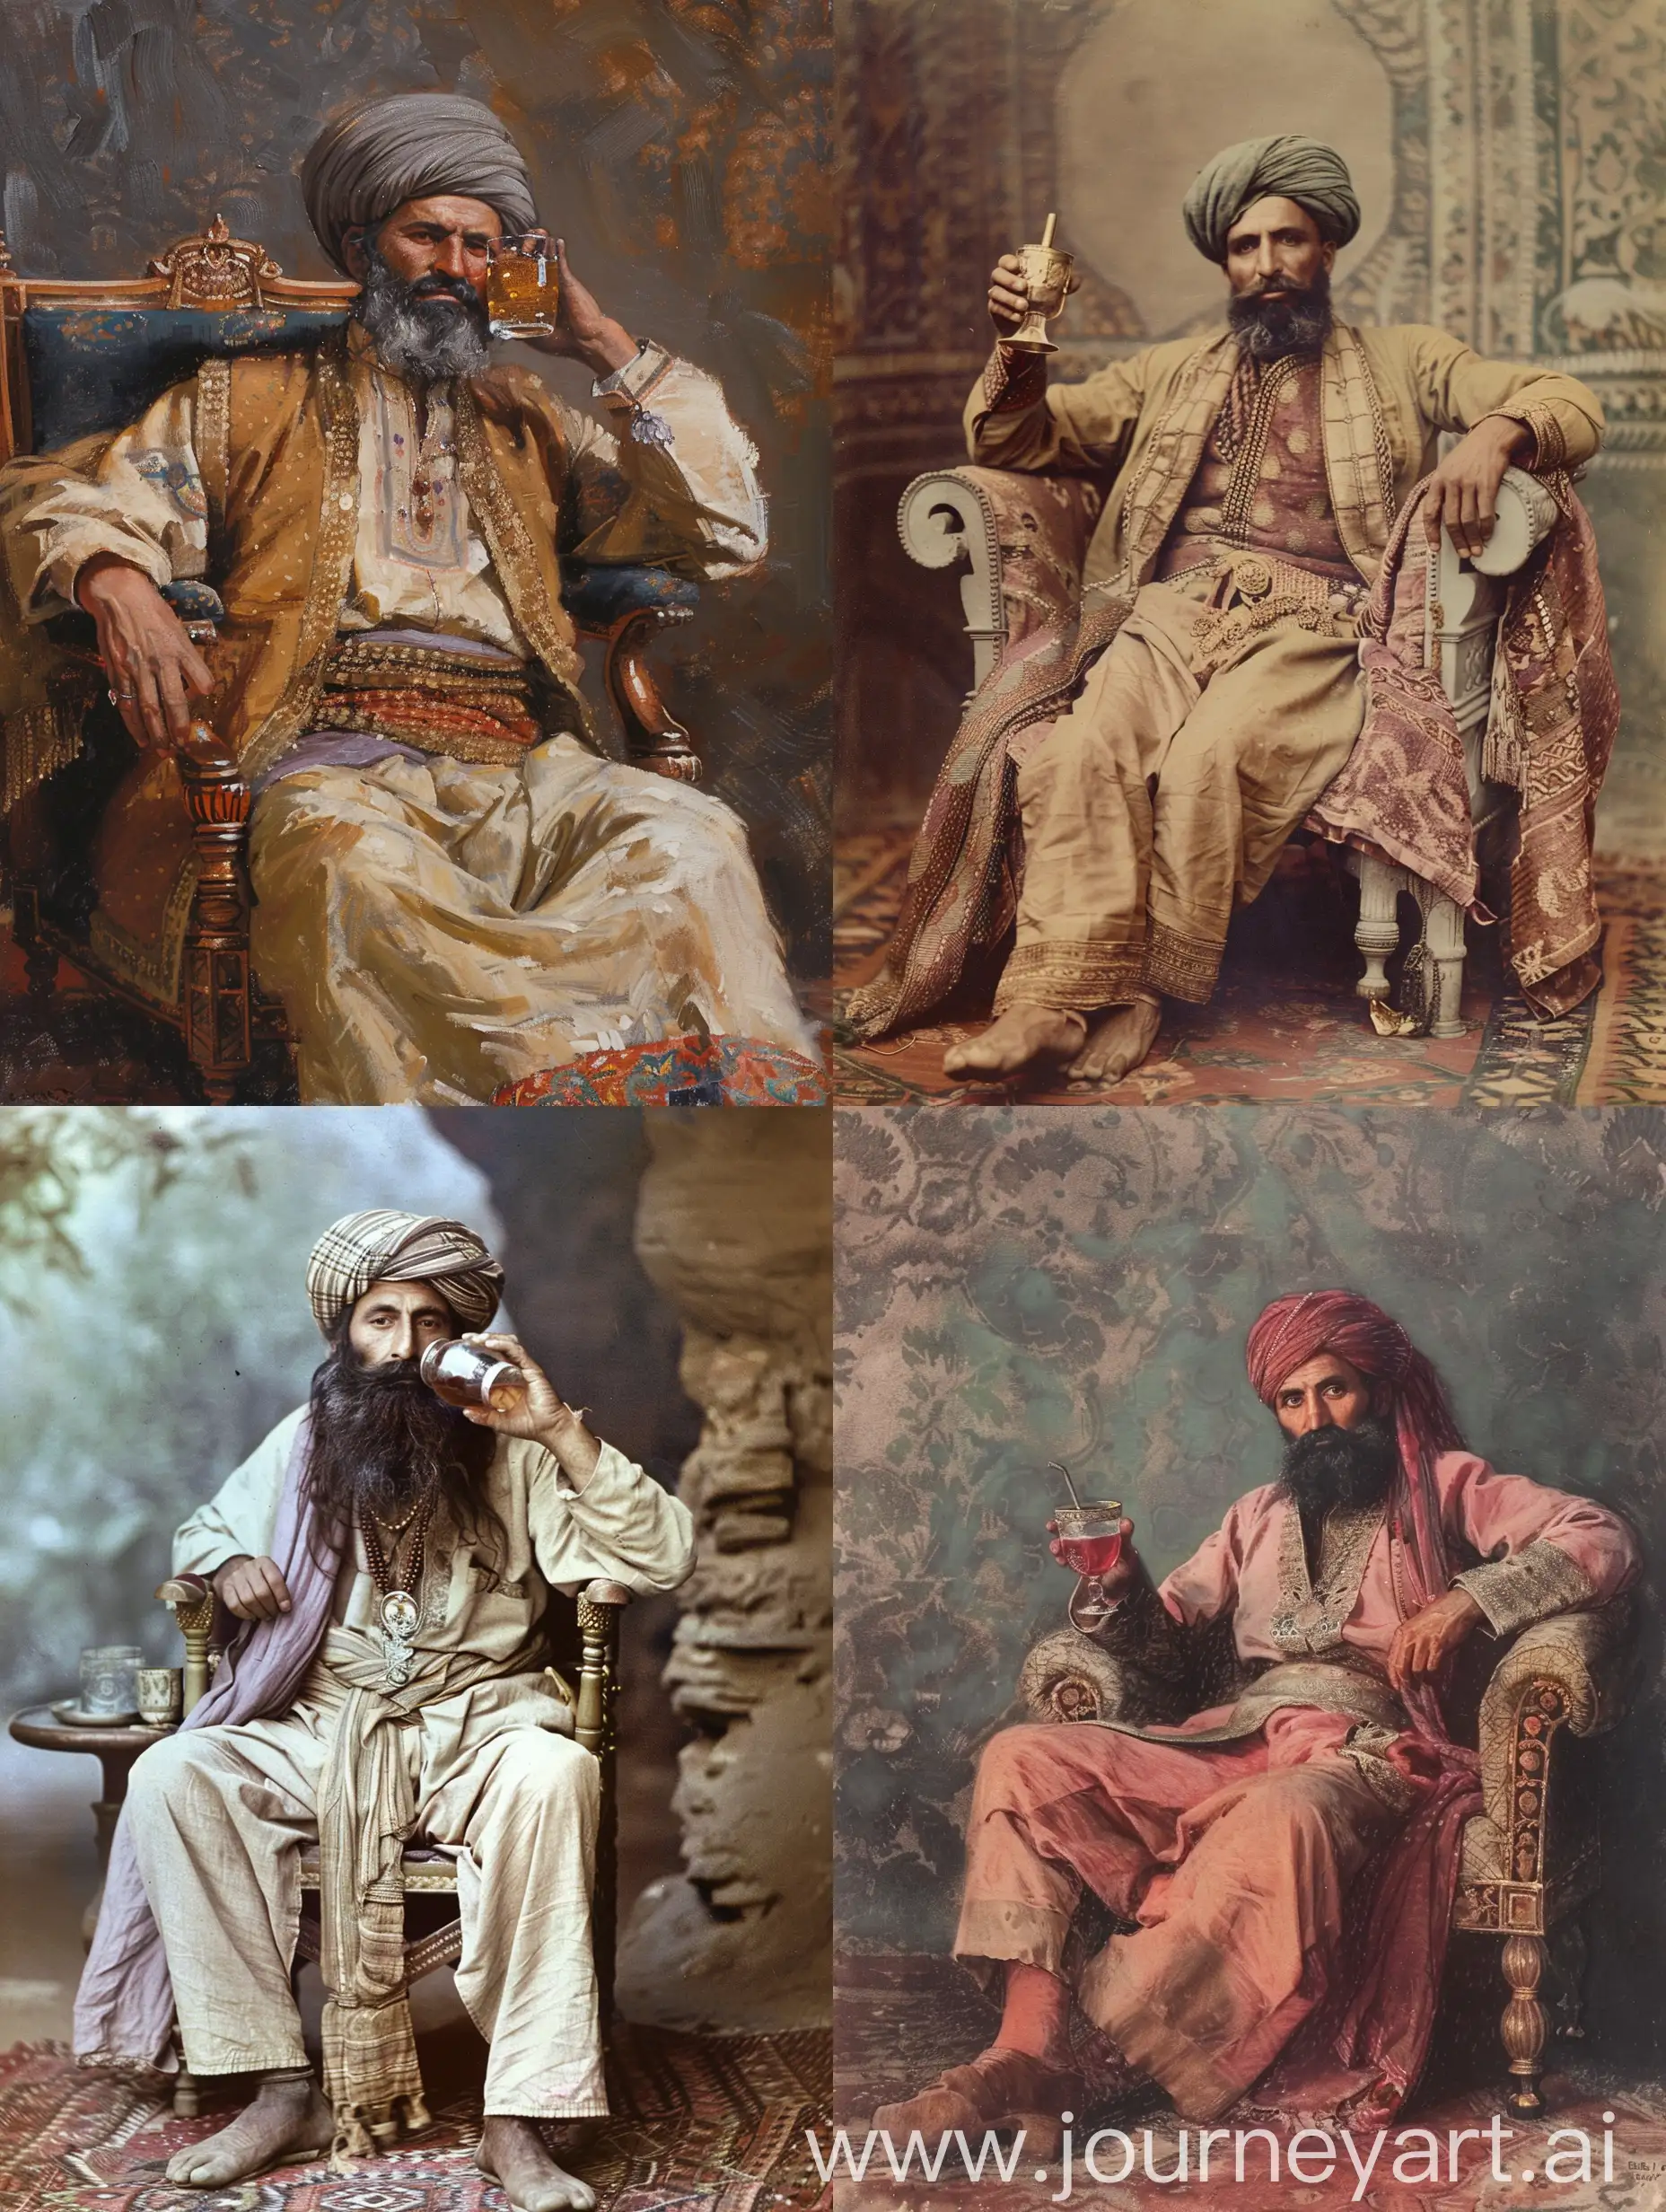 Emir abdur rahman khan "king" of barakzai dynasty sitting on chair drinking thea